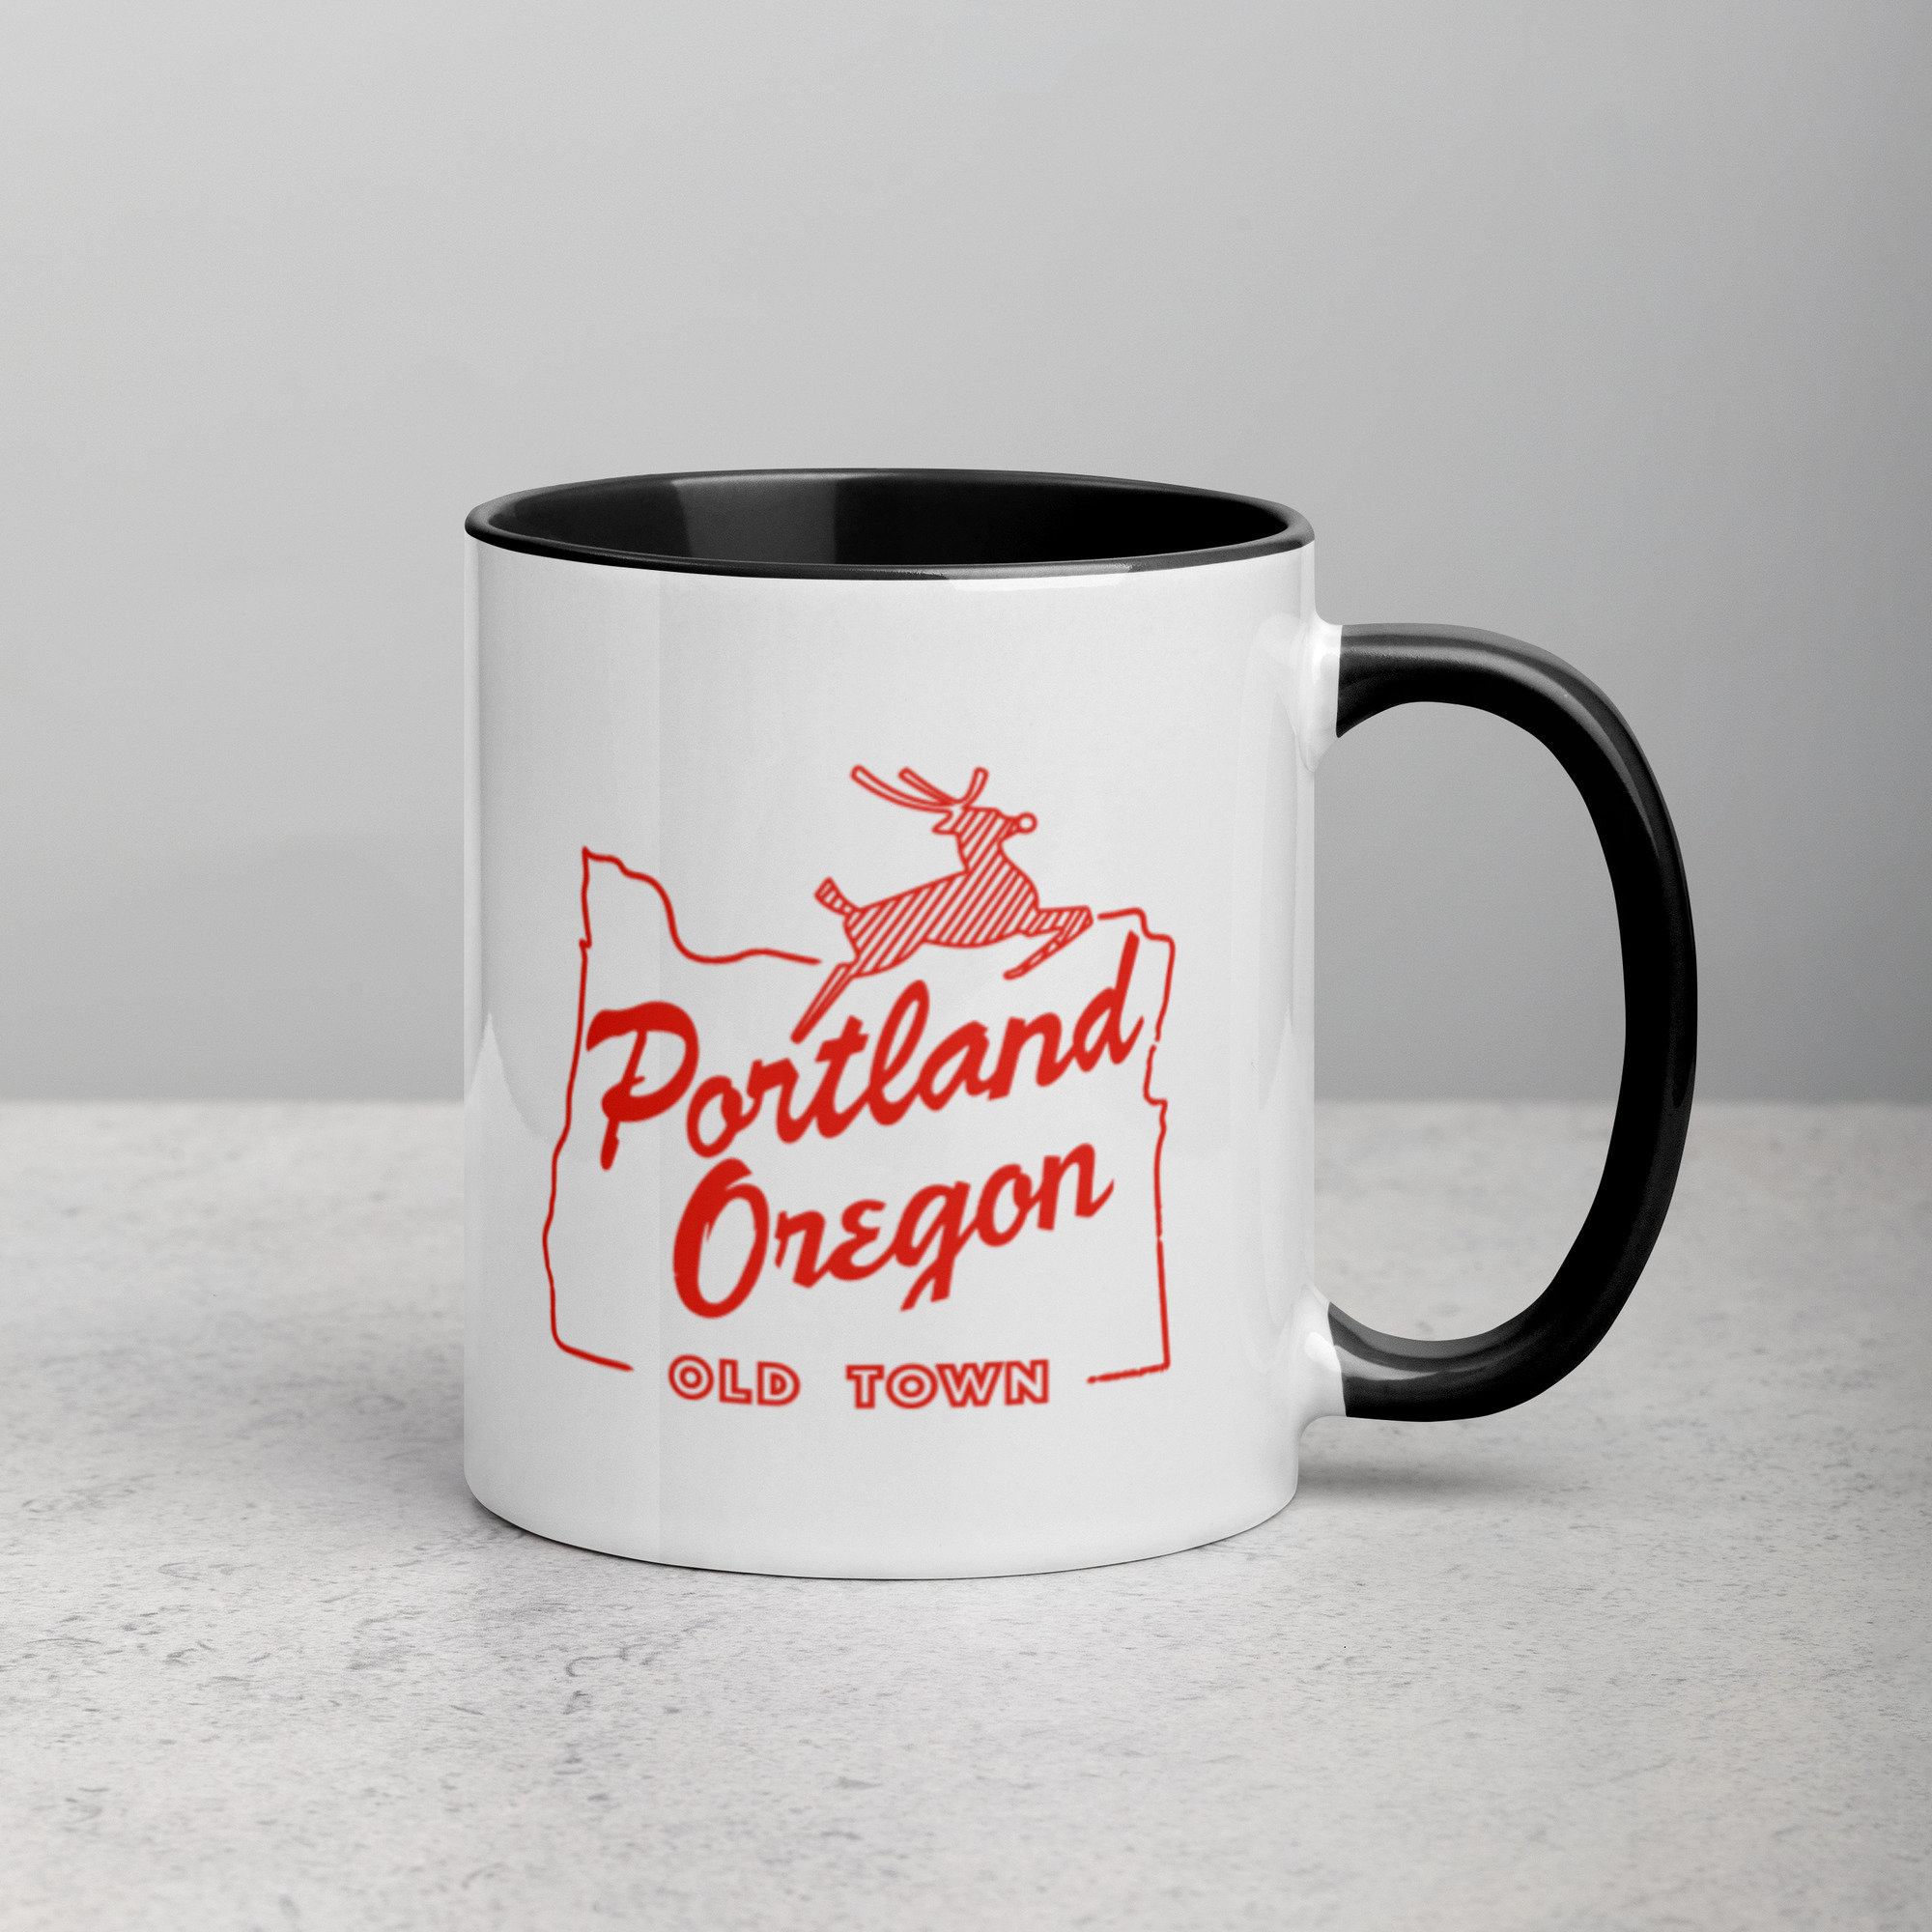 Portland Old Town Mug - Portland Oregon Old Town Coffee Cup - Orange Portland Mug - Portland OR Mug - Portland Old Town Double Sided Mug